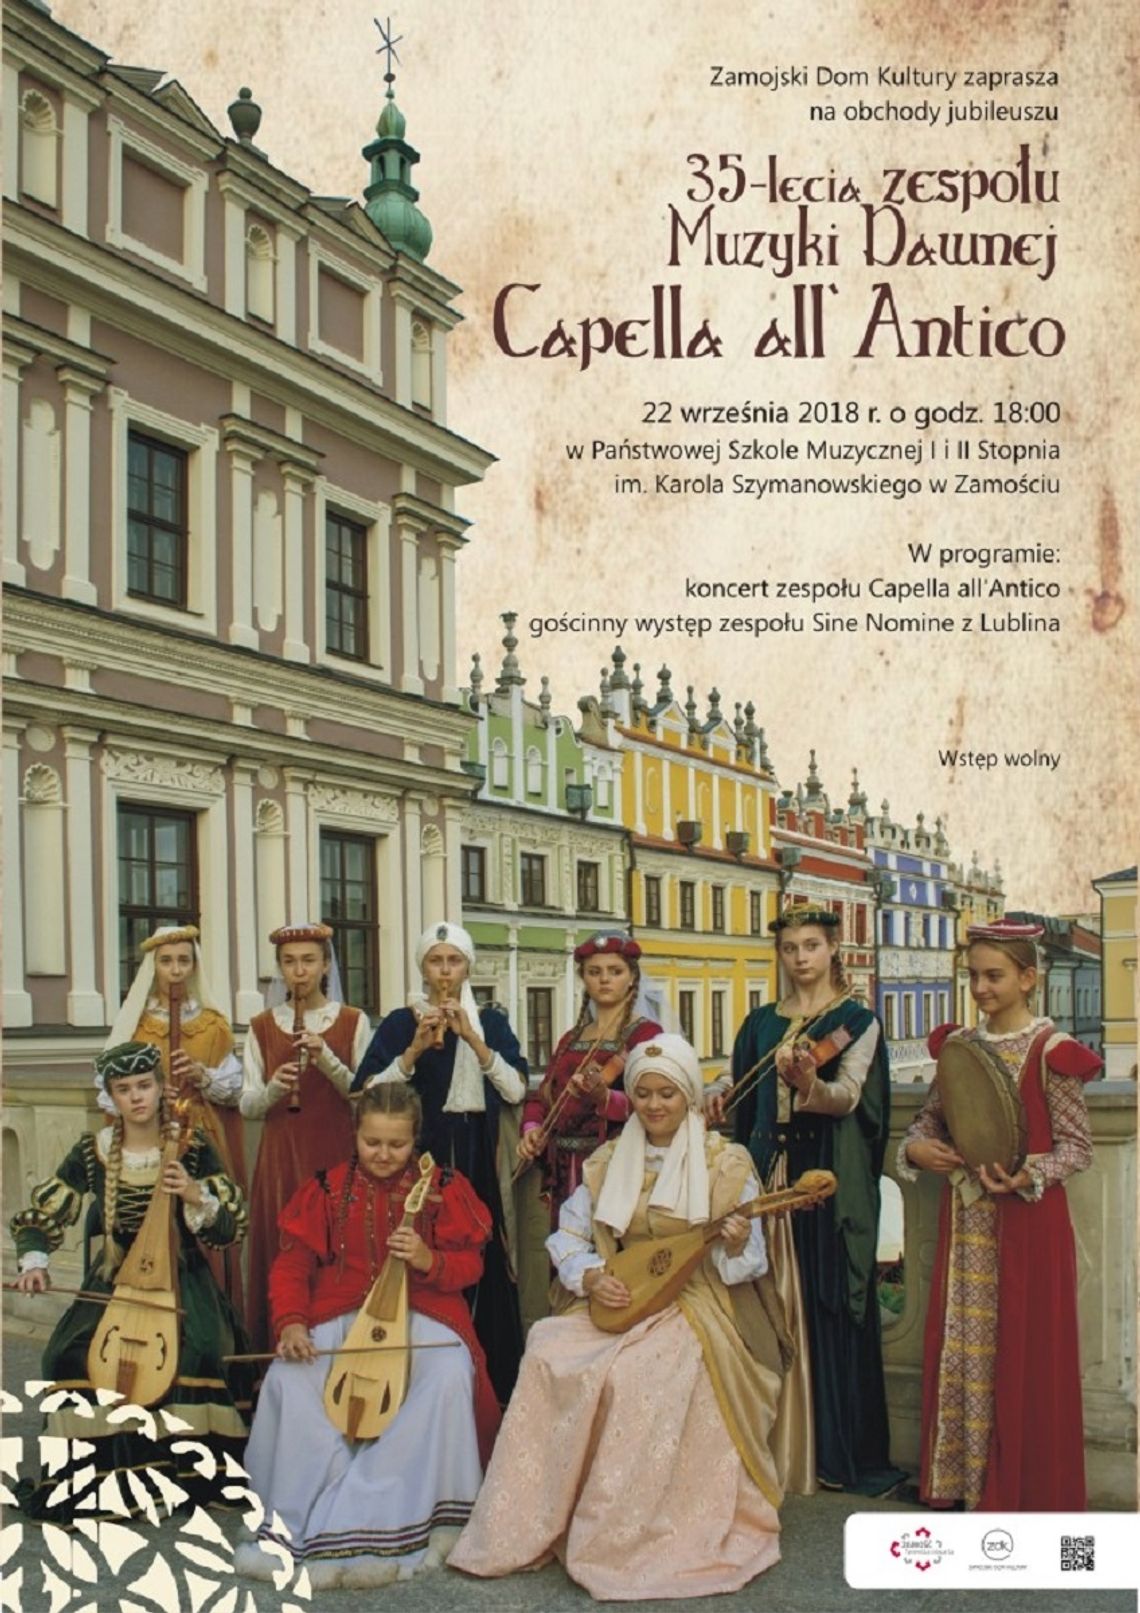 Zamość: Capella all`Antico koncertuje już 35 lat